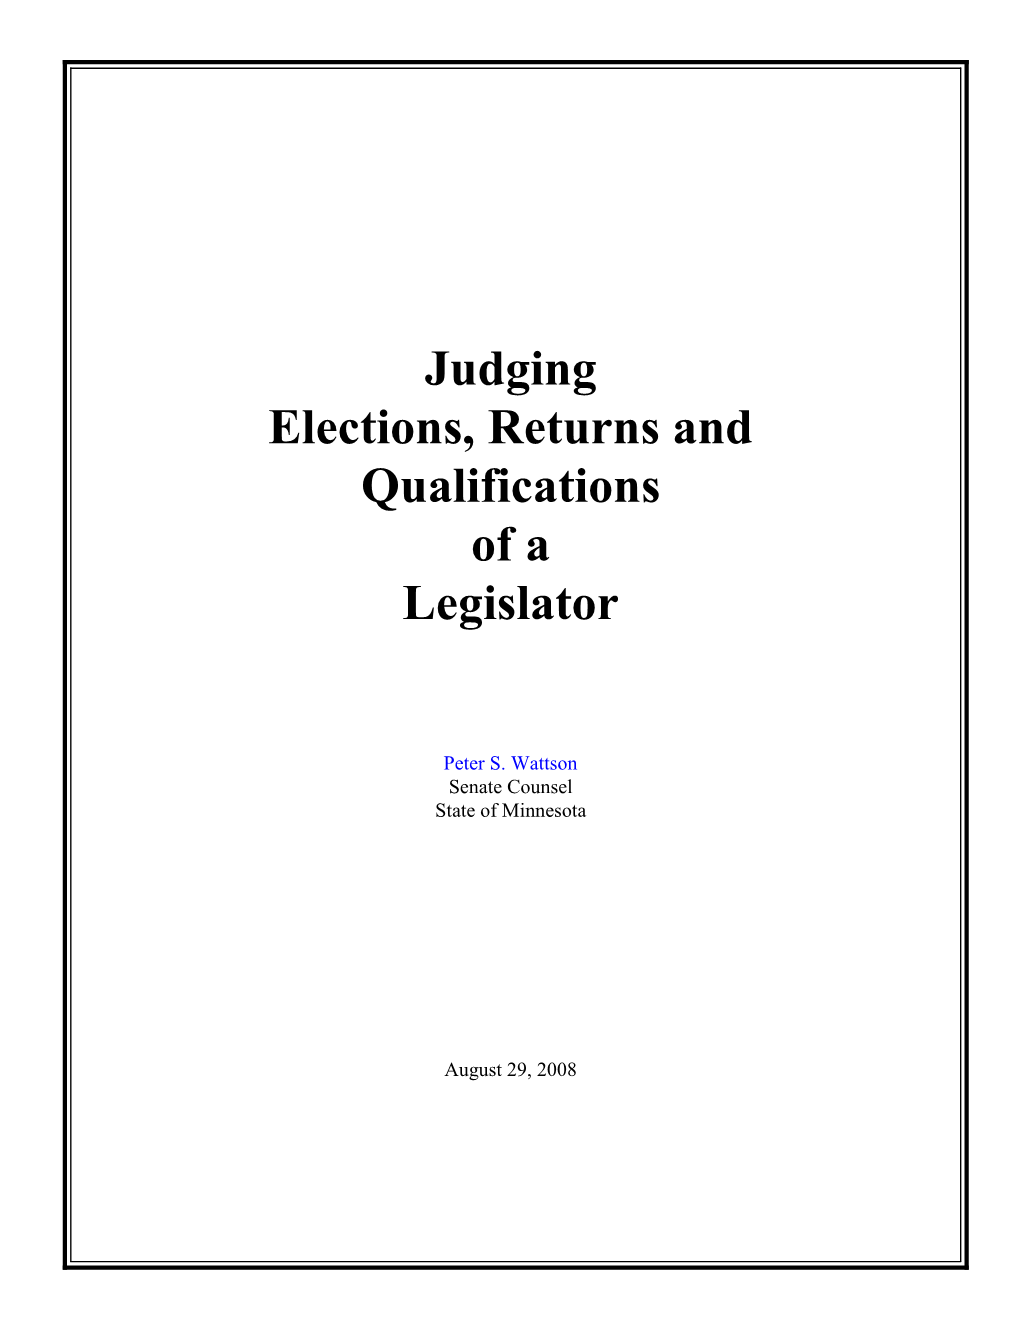 Judging Elections, Returns and Qualifications of a Legislator